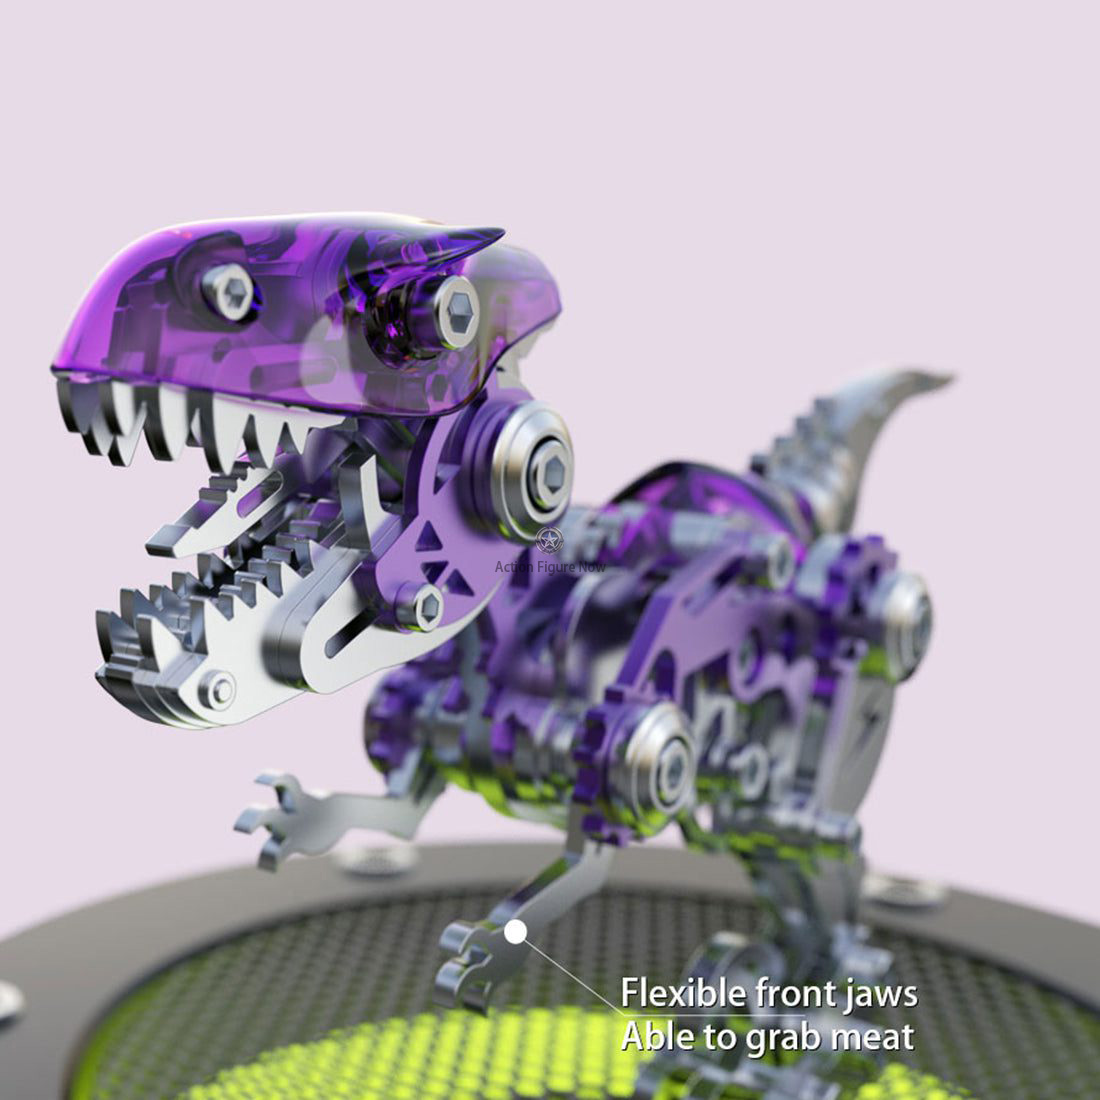 Jurassic World Toys Dinosaur Toys Lego Dinosaurs Puzzle Assemblé To